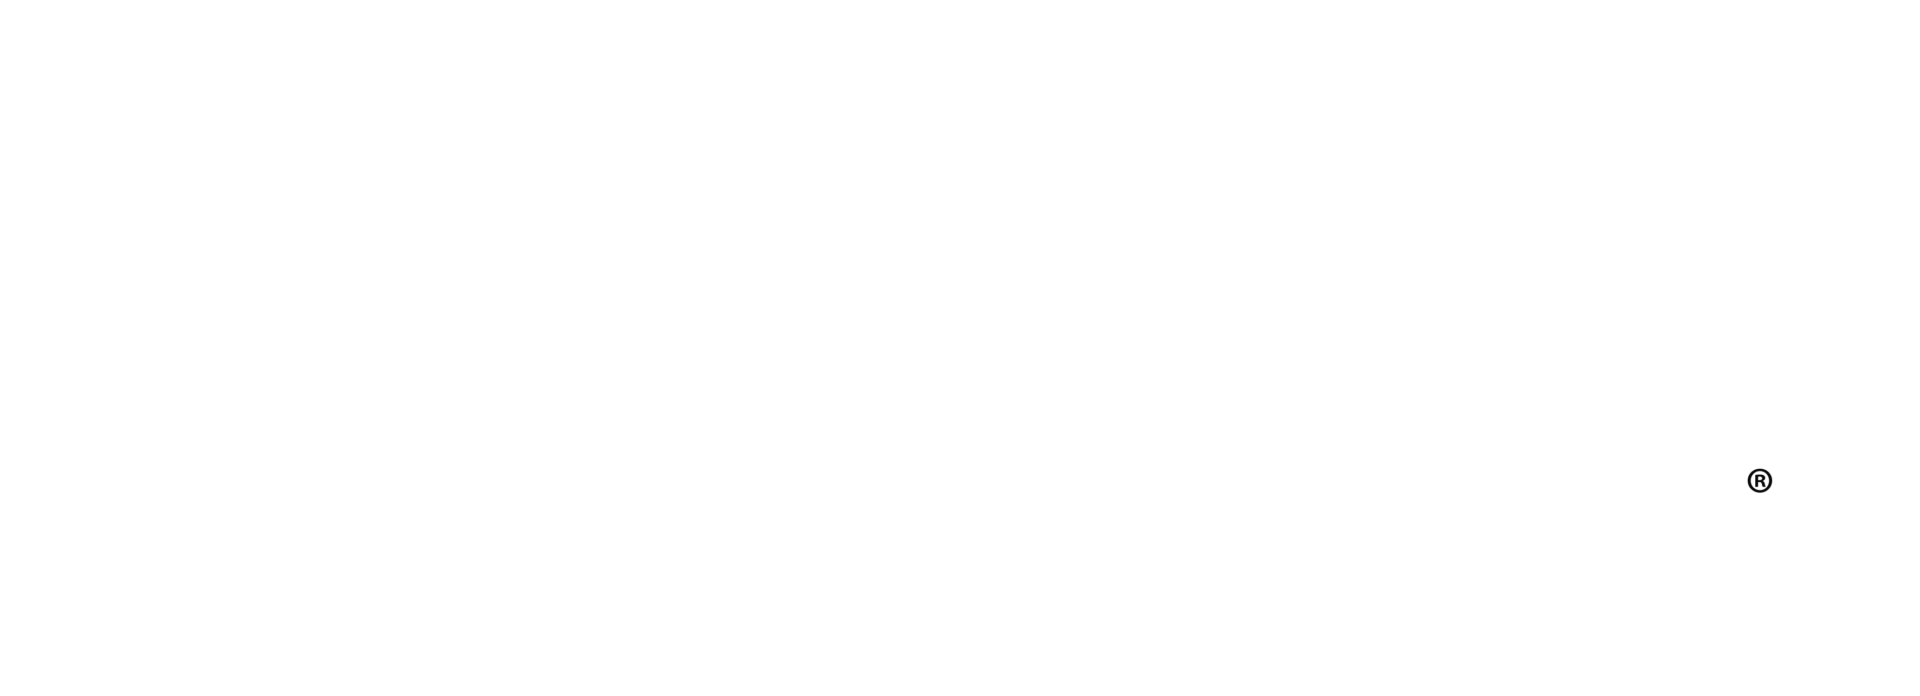 Gravity Coffee - Mount Vernon logo